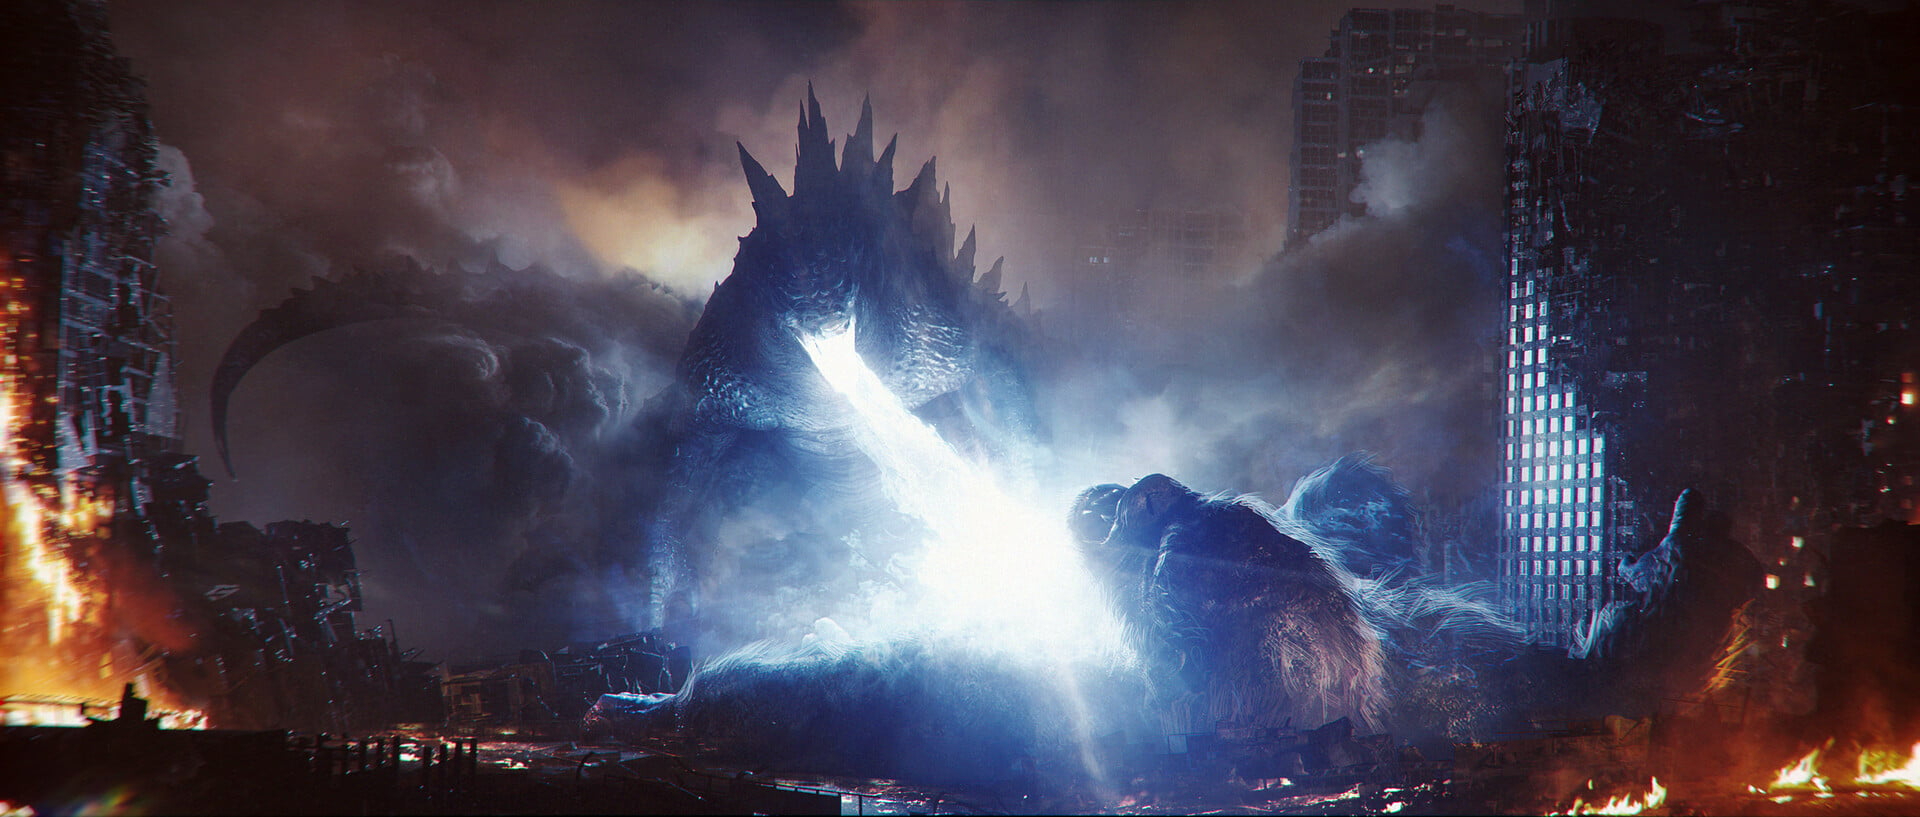 Wallpaper Godzilla, King Kong, Creature, Battle